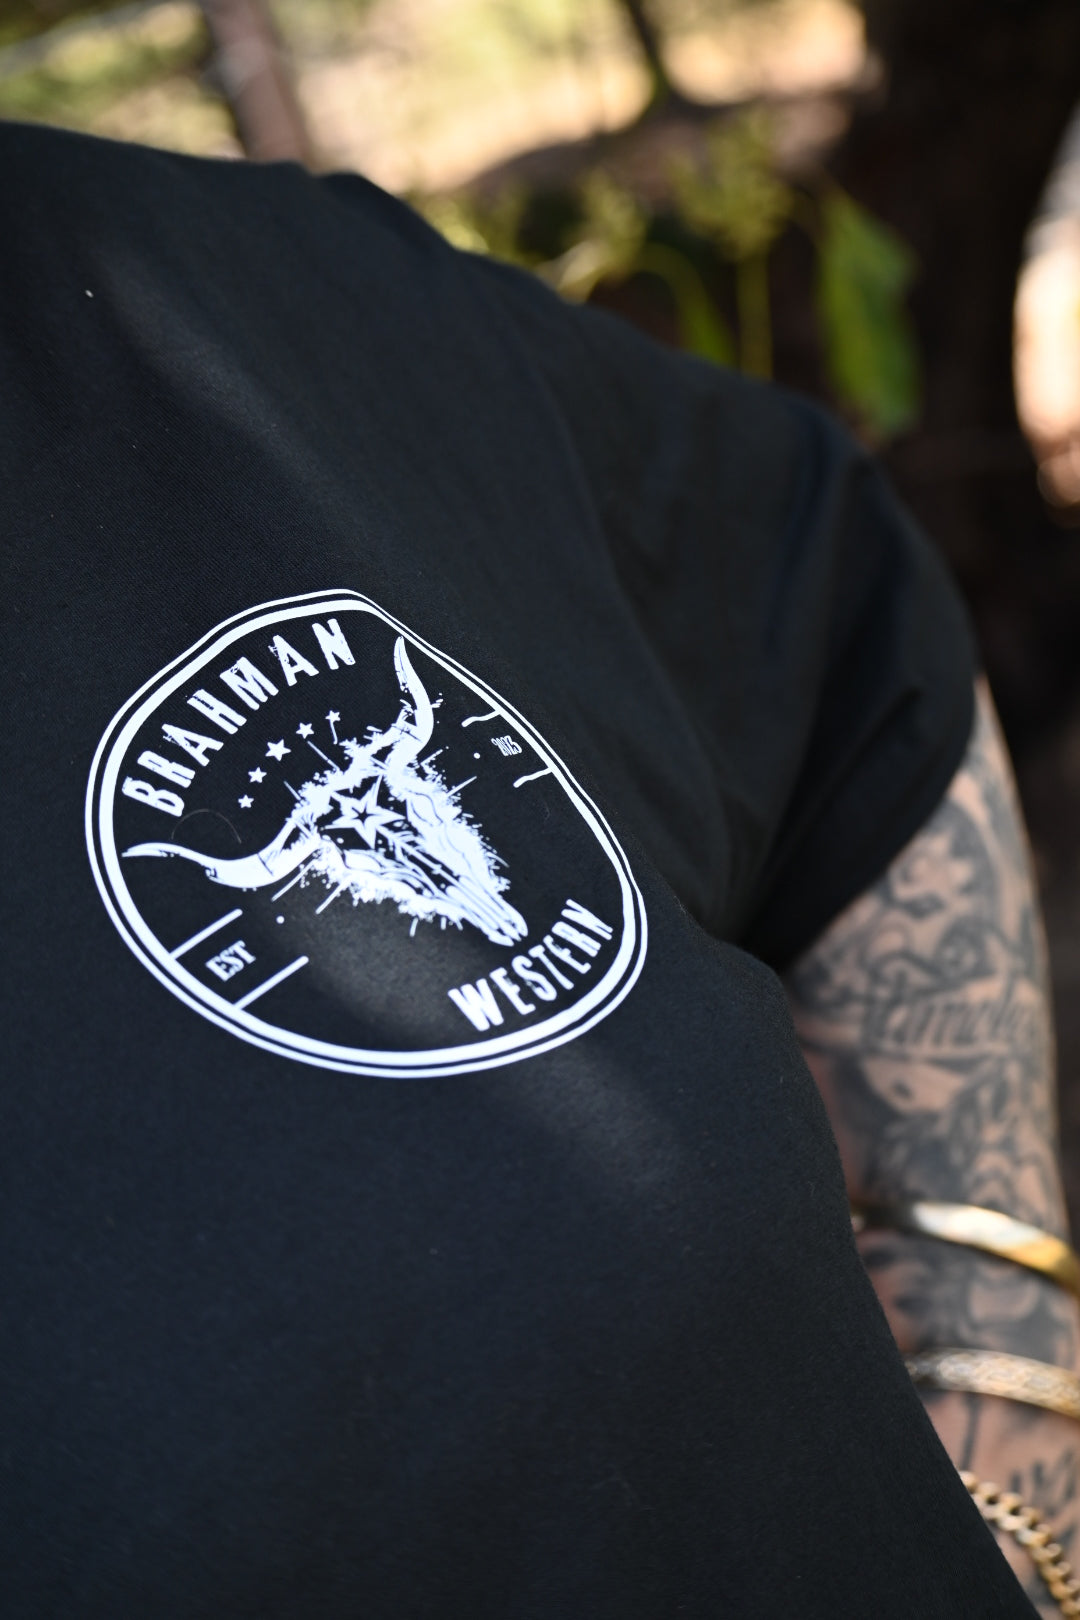 Unisex Black Brahman Western Grunge T-Shirt - Sizes S to 5XL on